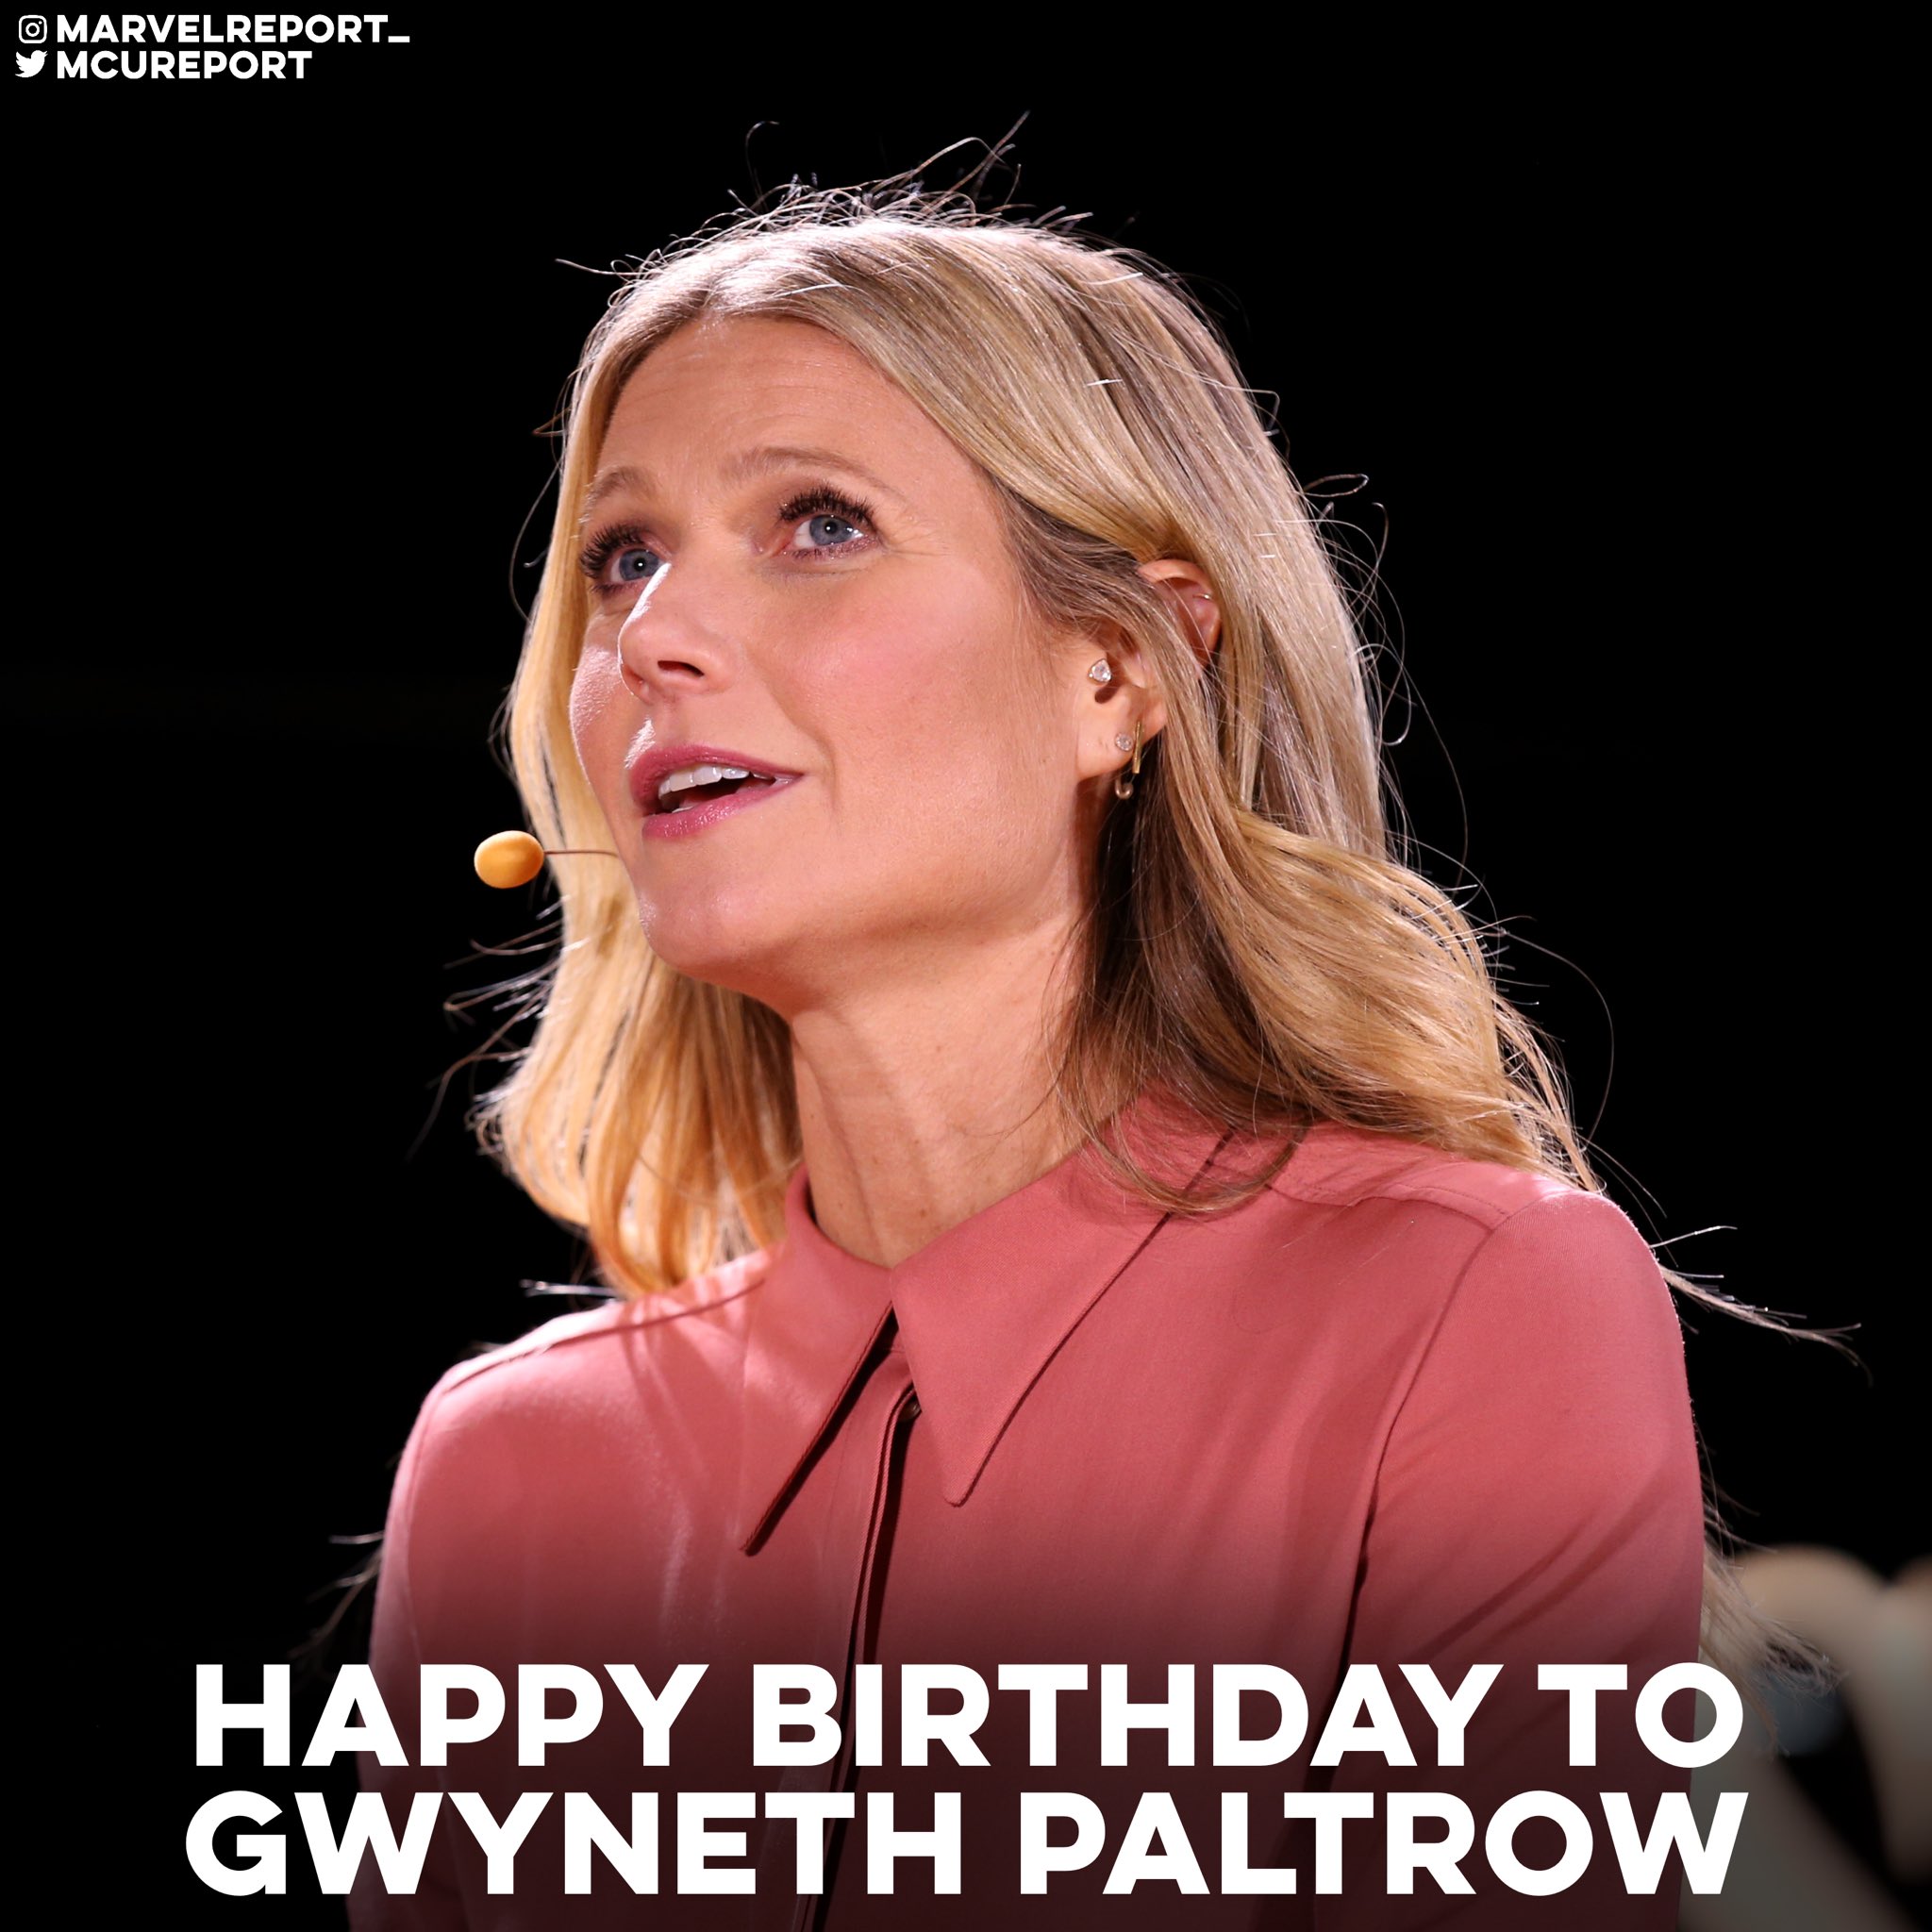 Happy Birthday to Gwyneth Paltrow who turns 49 today 